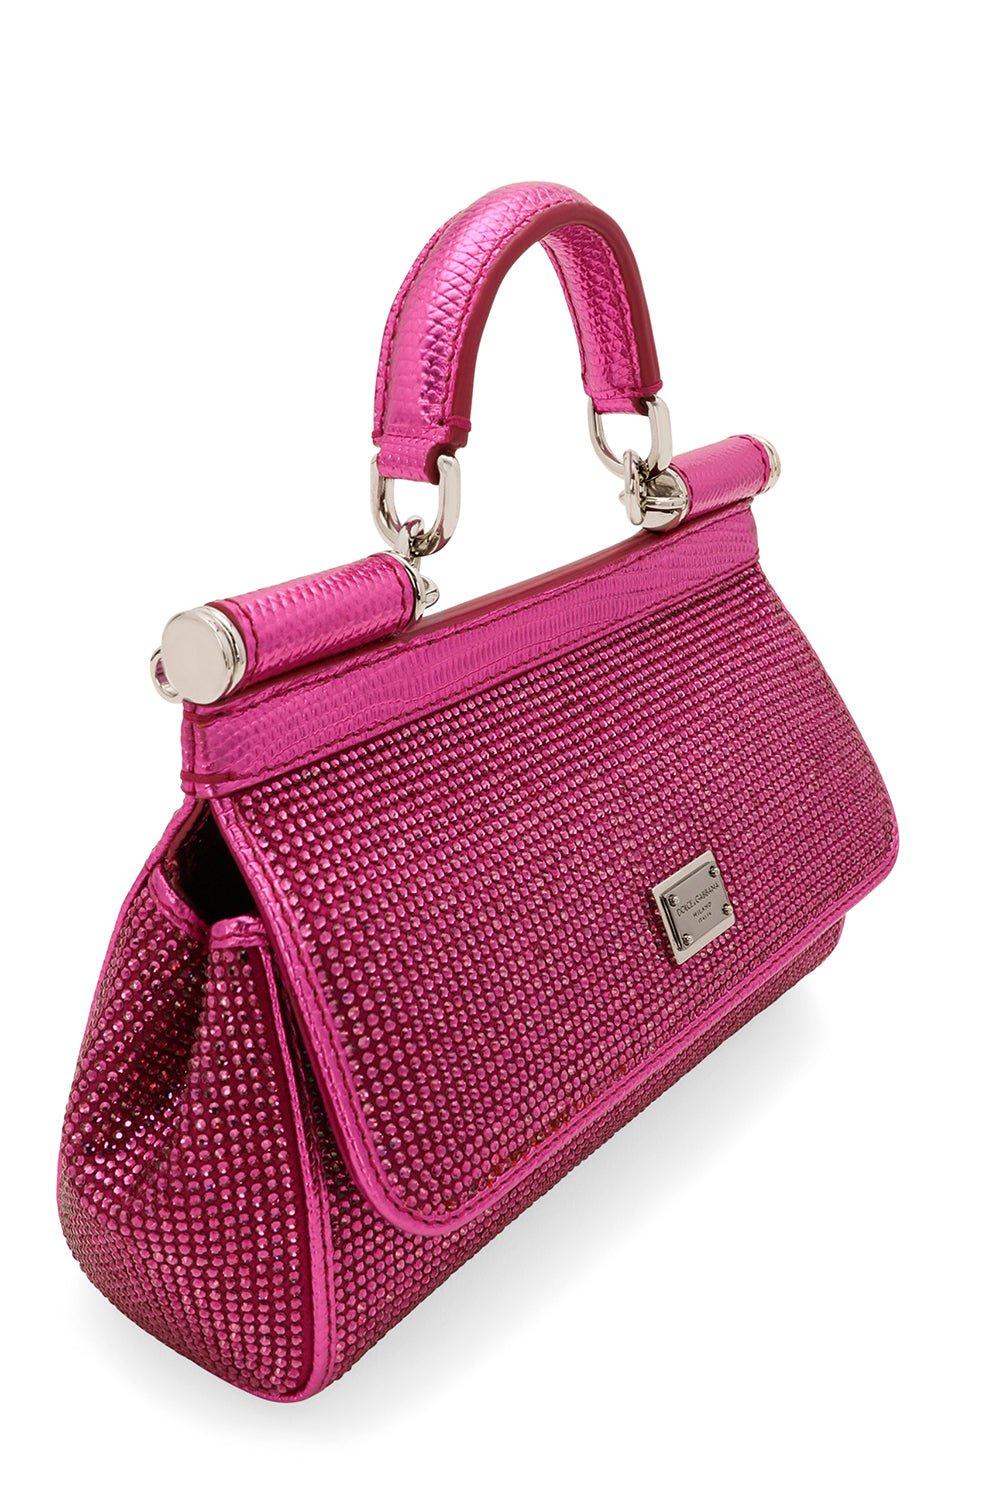 Dolce & Gabbana Small Sicily Handbag